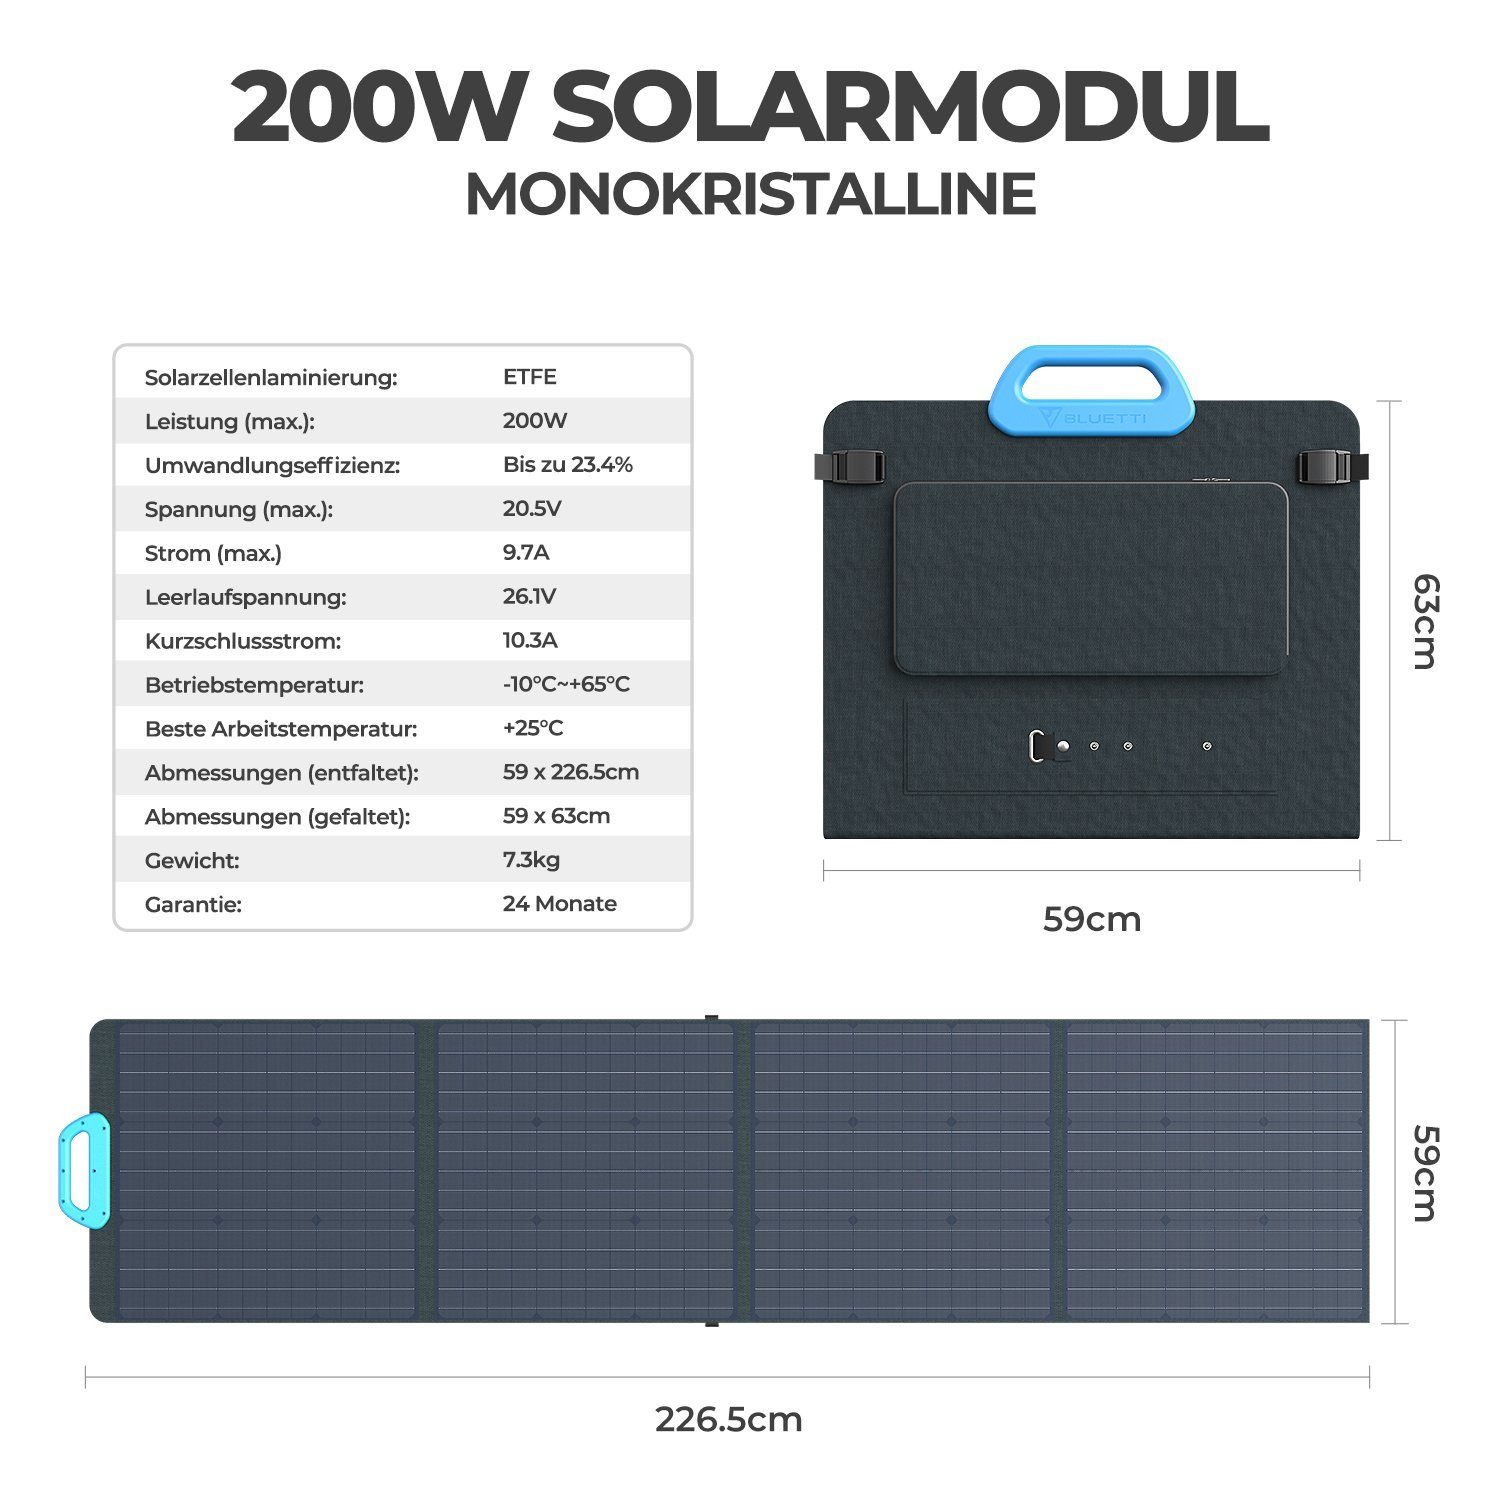 BLUETTI Solaranlage PV200 Solarpanel, IP65 Schutz MONOKRISTALLIN, 200,00 W